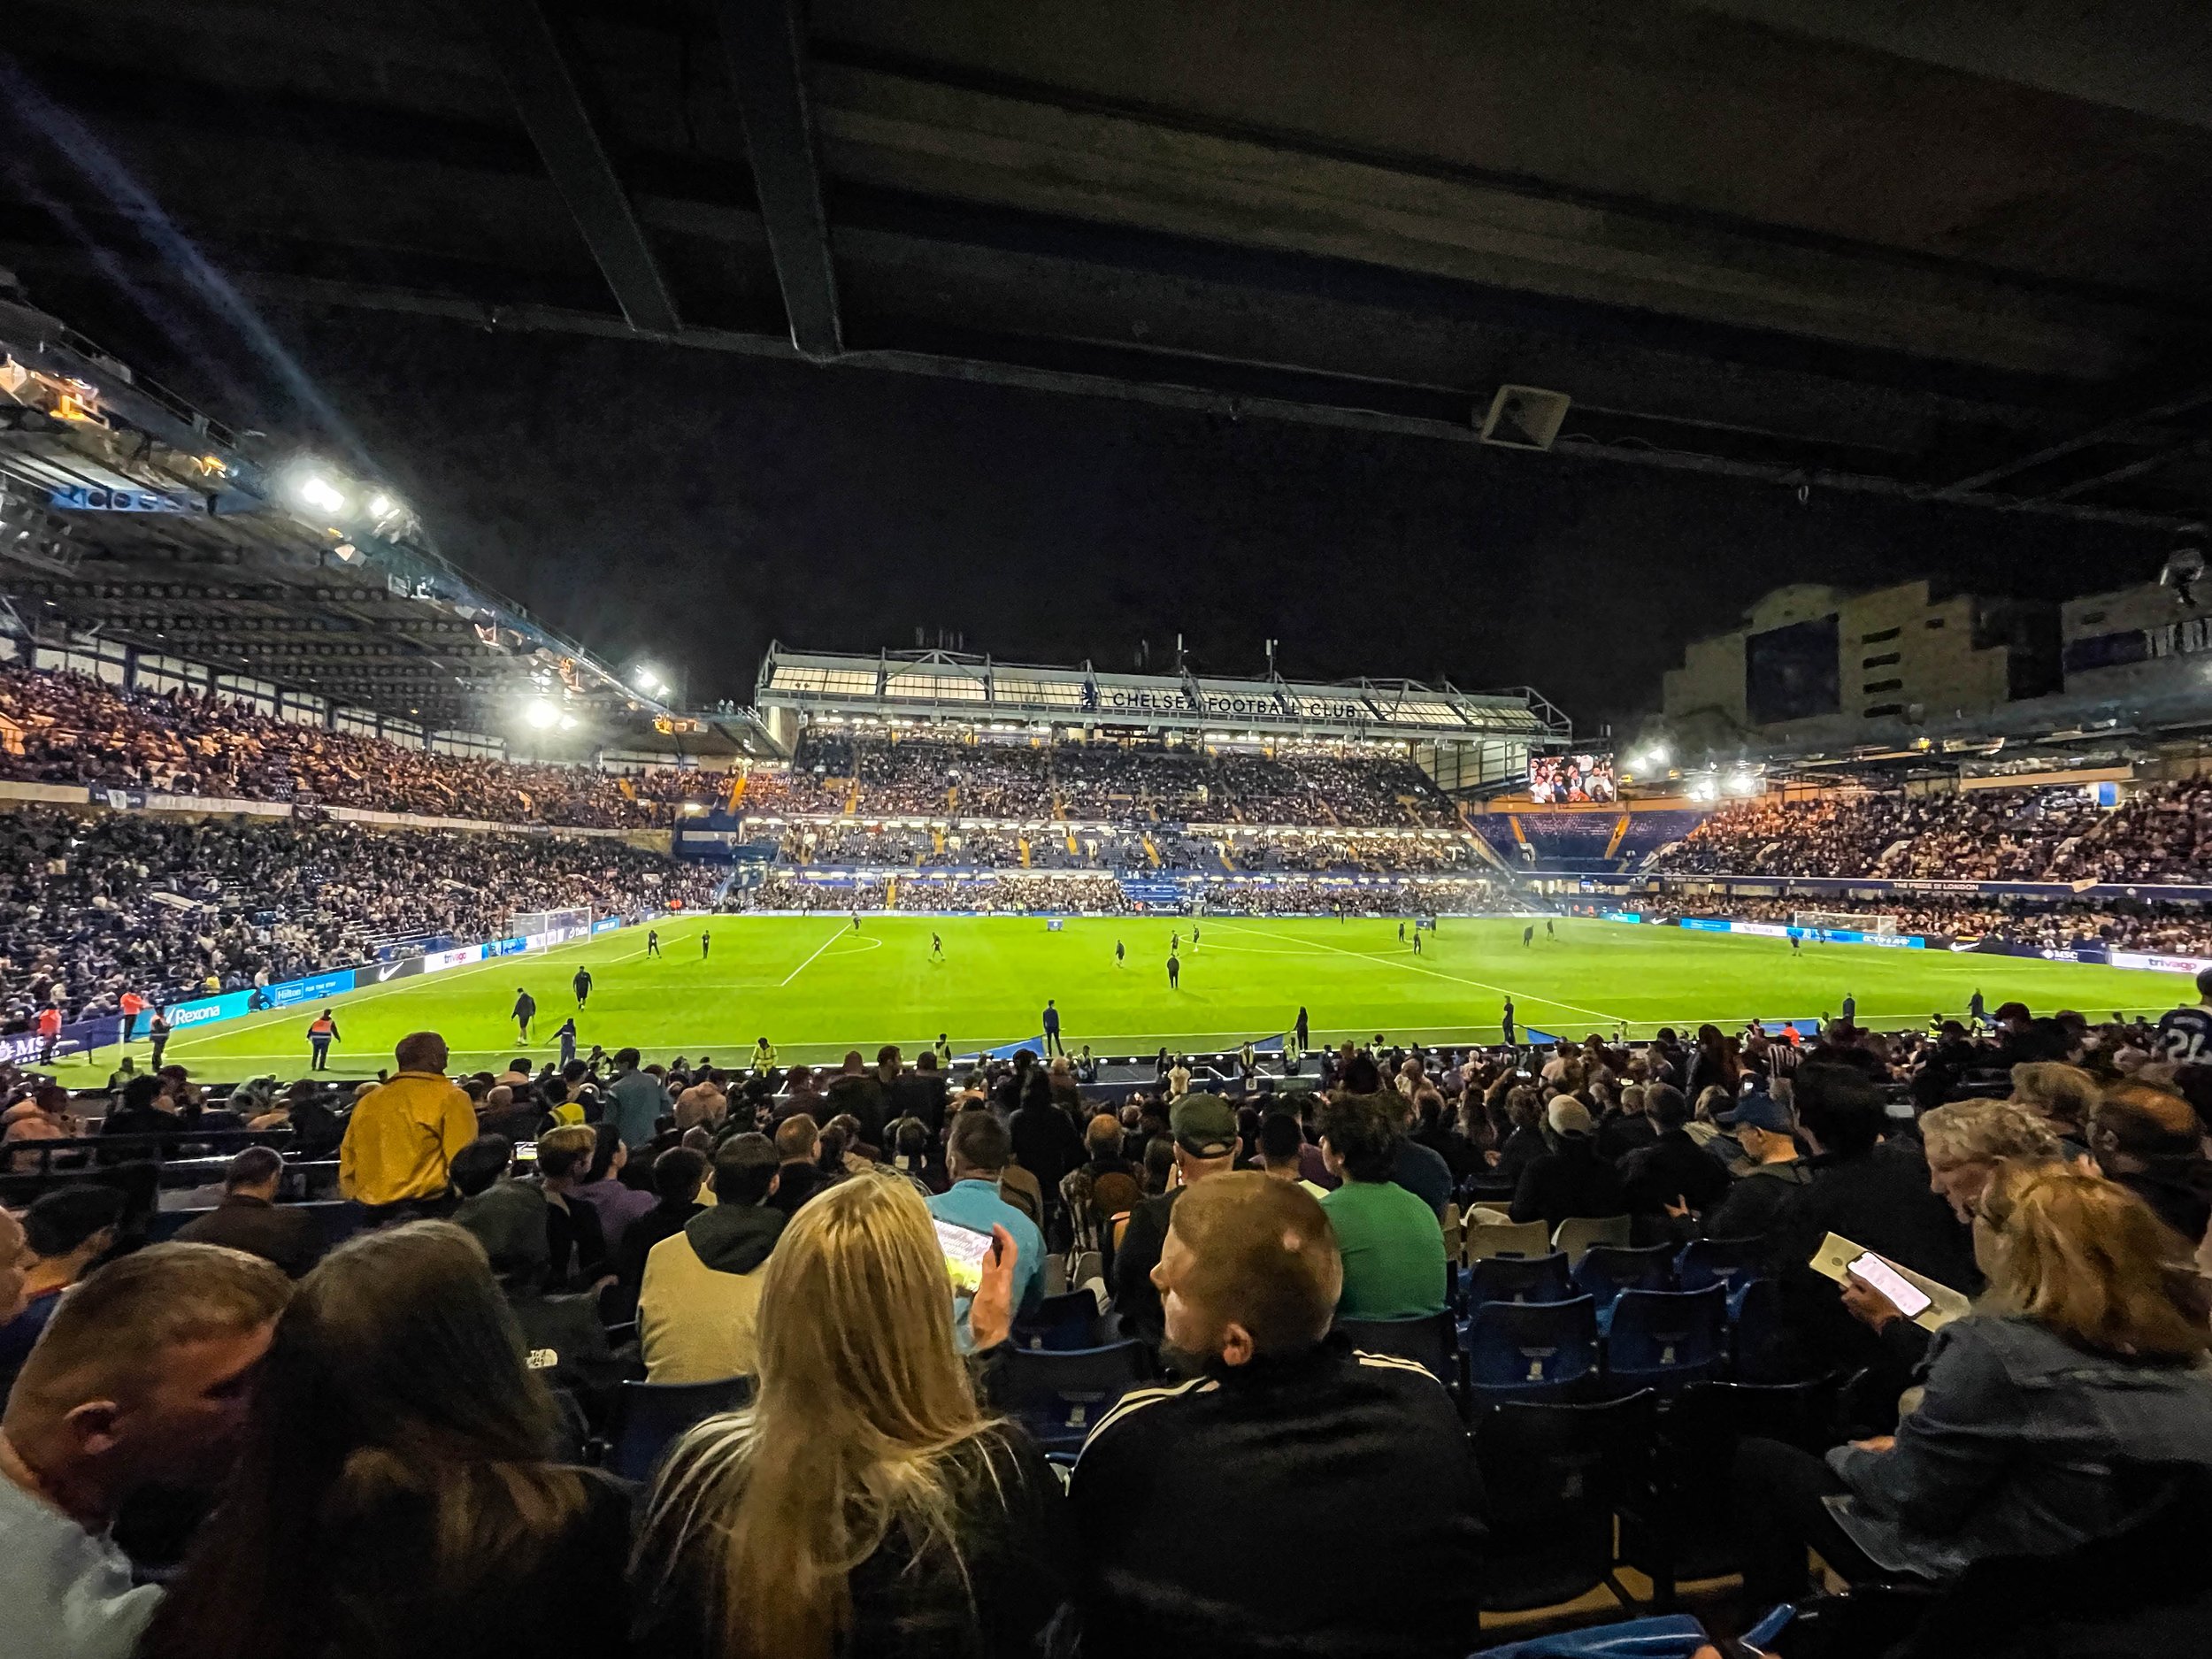 Peter Sees Chelsea v. Brighton in EFL Cup @Stamford Bridge (London